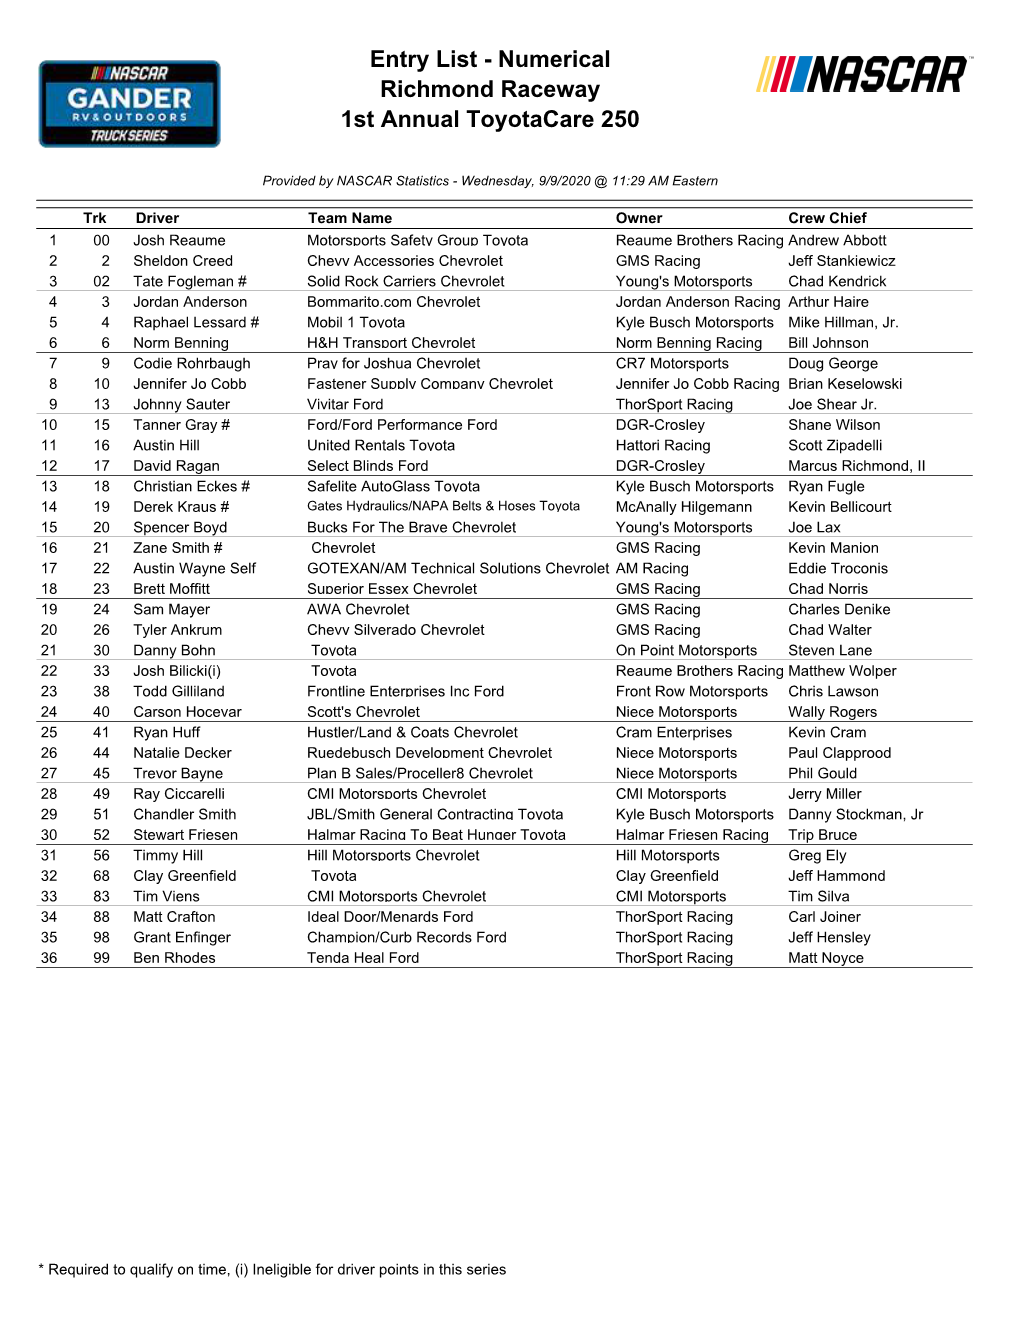 Entry List - Numerical Richmond Raceway 1St Annual Toyotacare 250